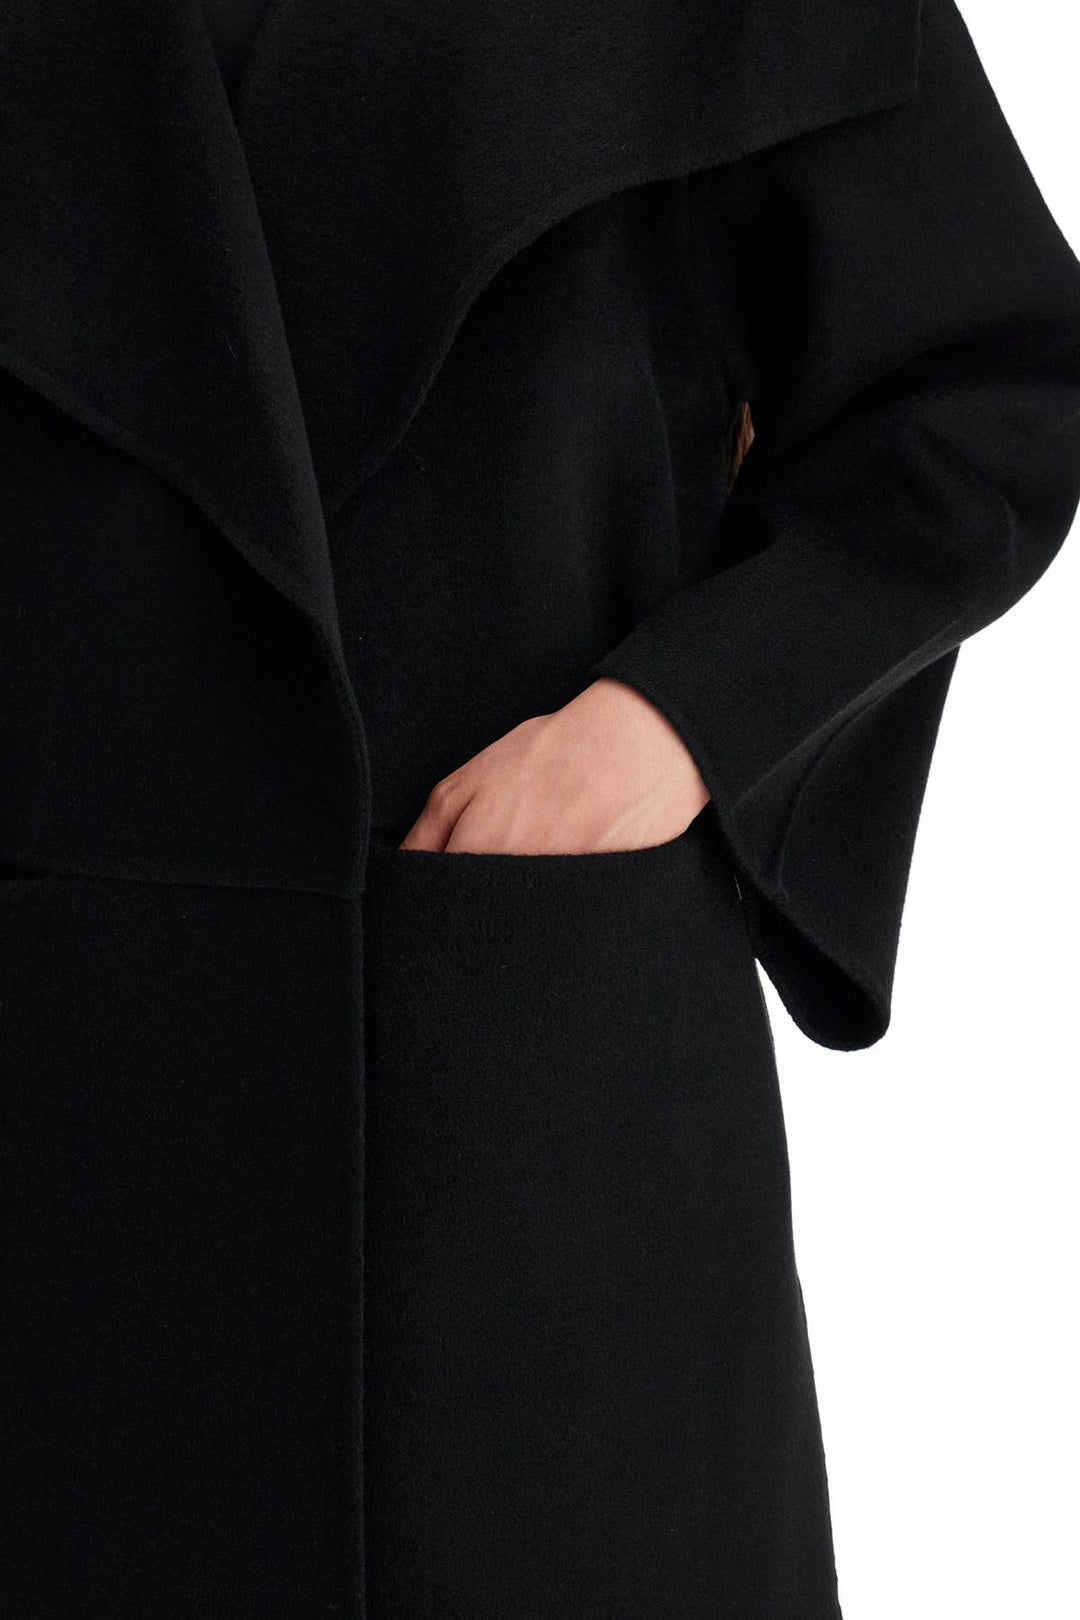 Toteme Signature Wool Cashmere Coat   Black